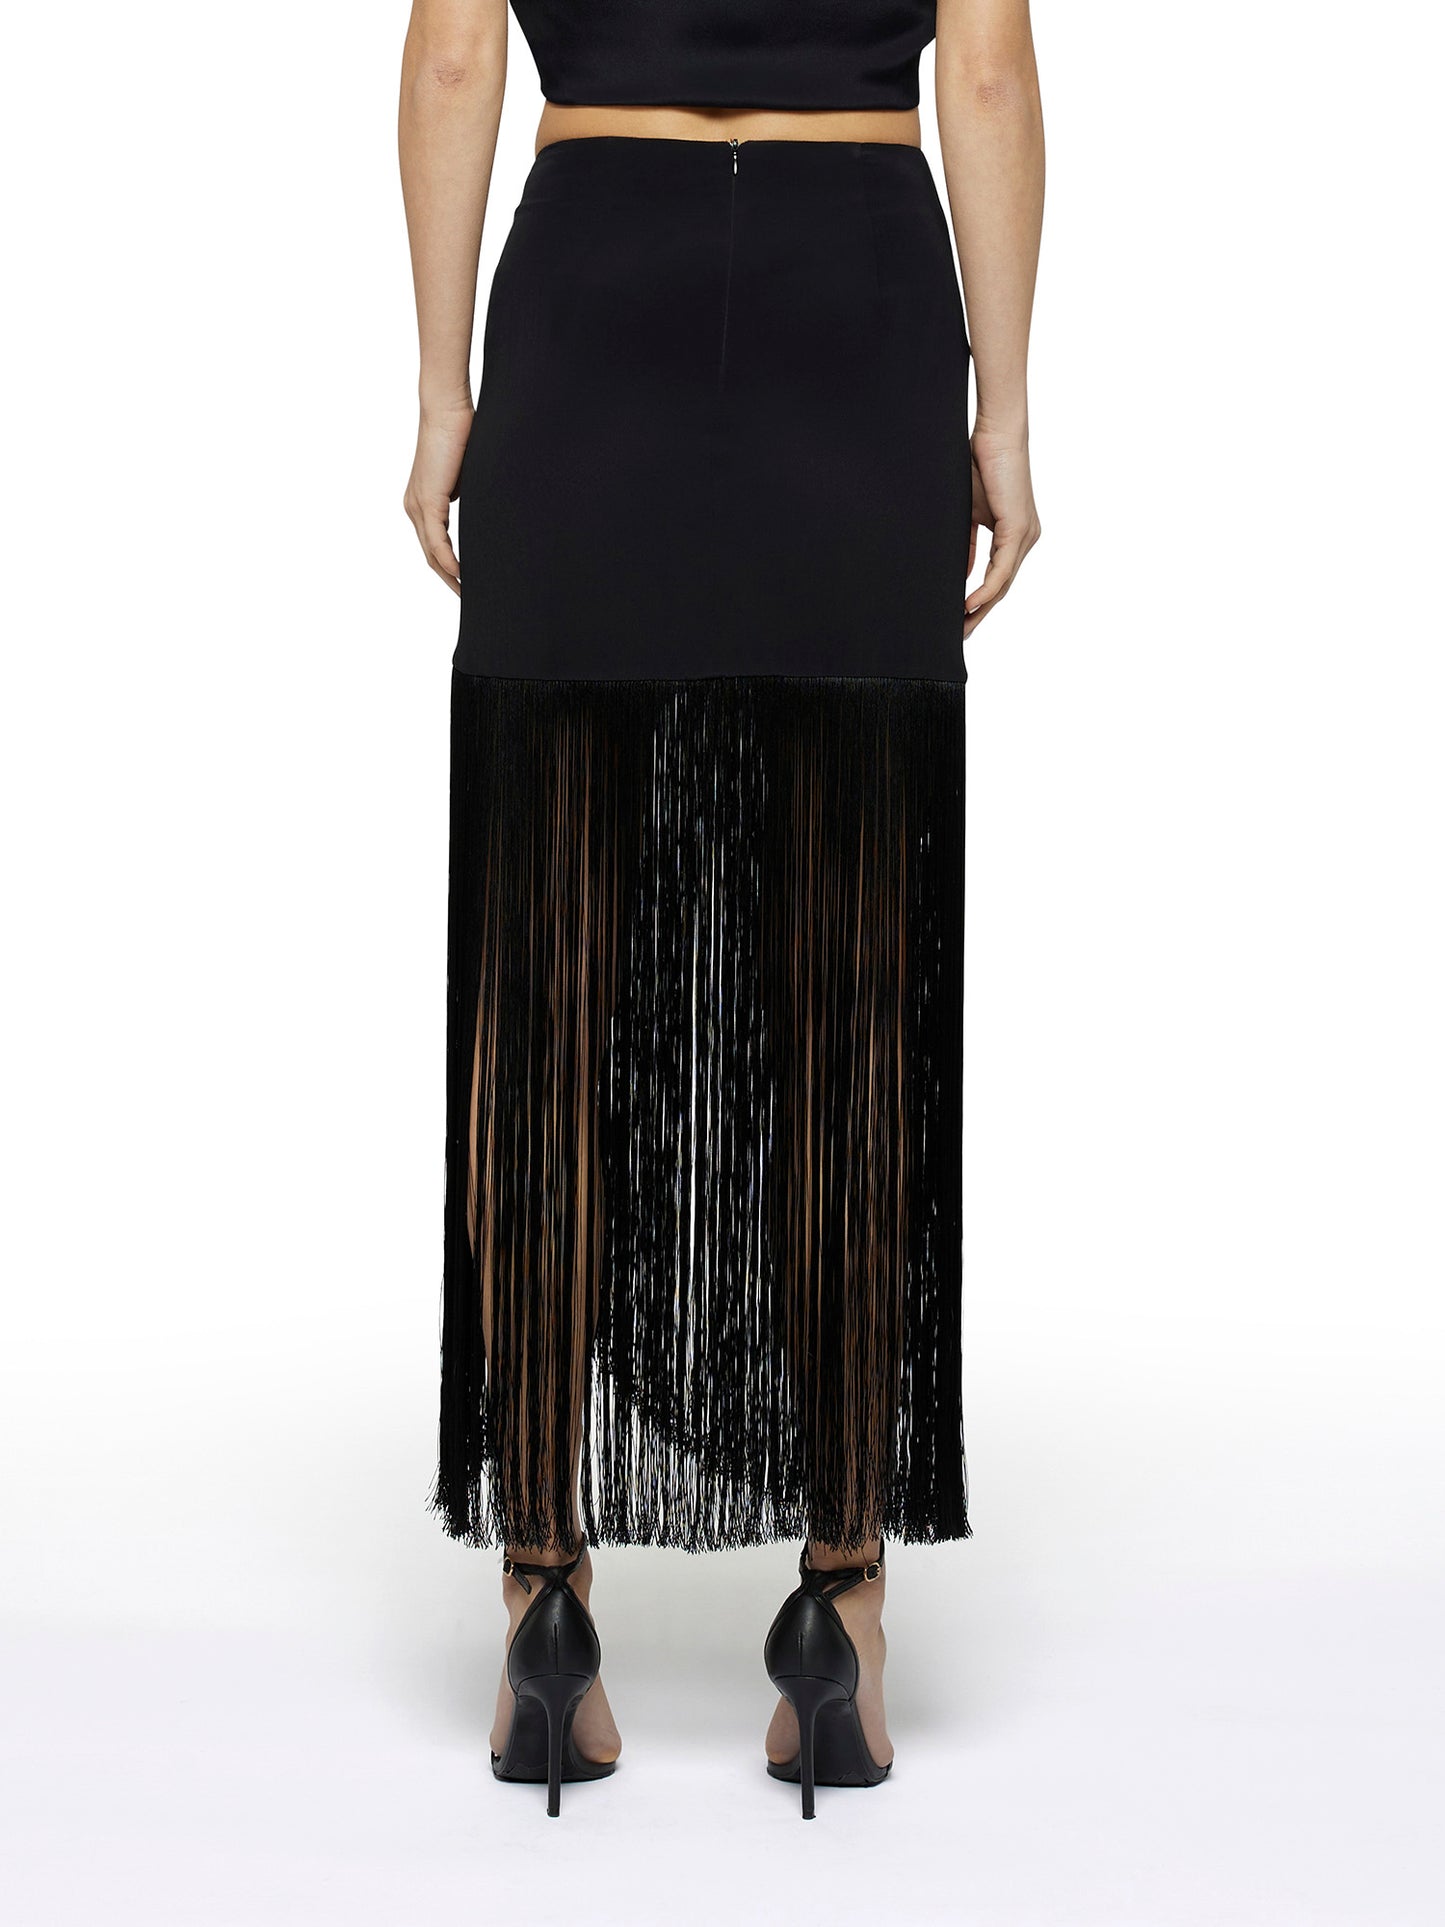 Silk acetate asymmetrical skirt with maxi fringe